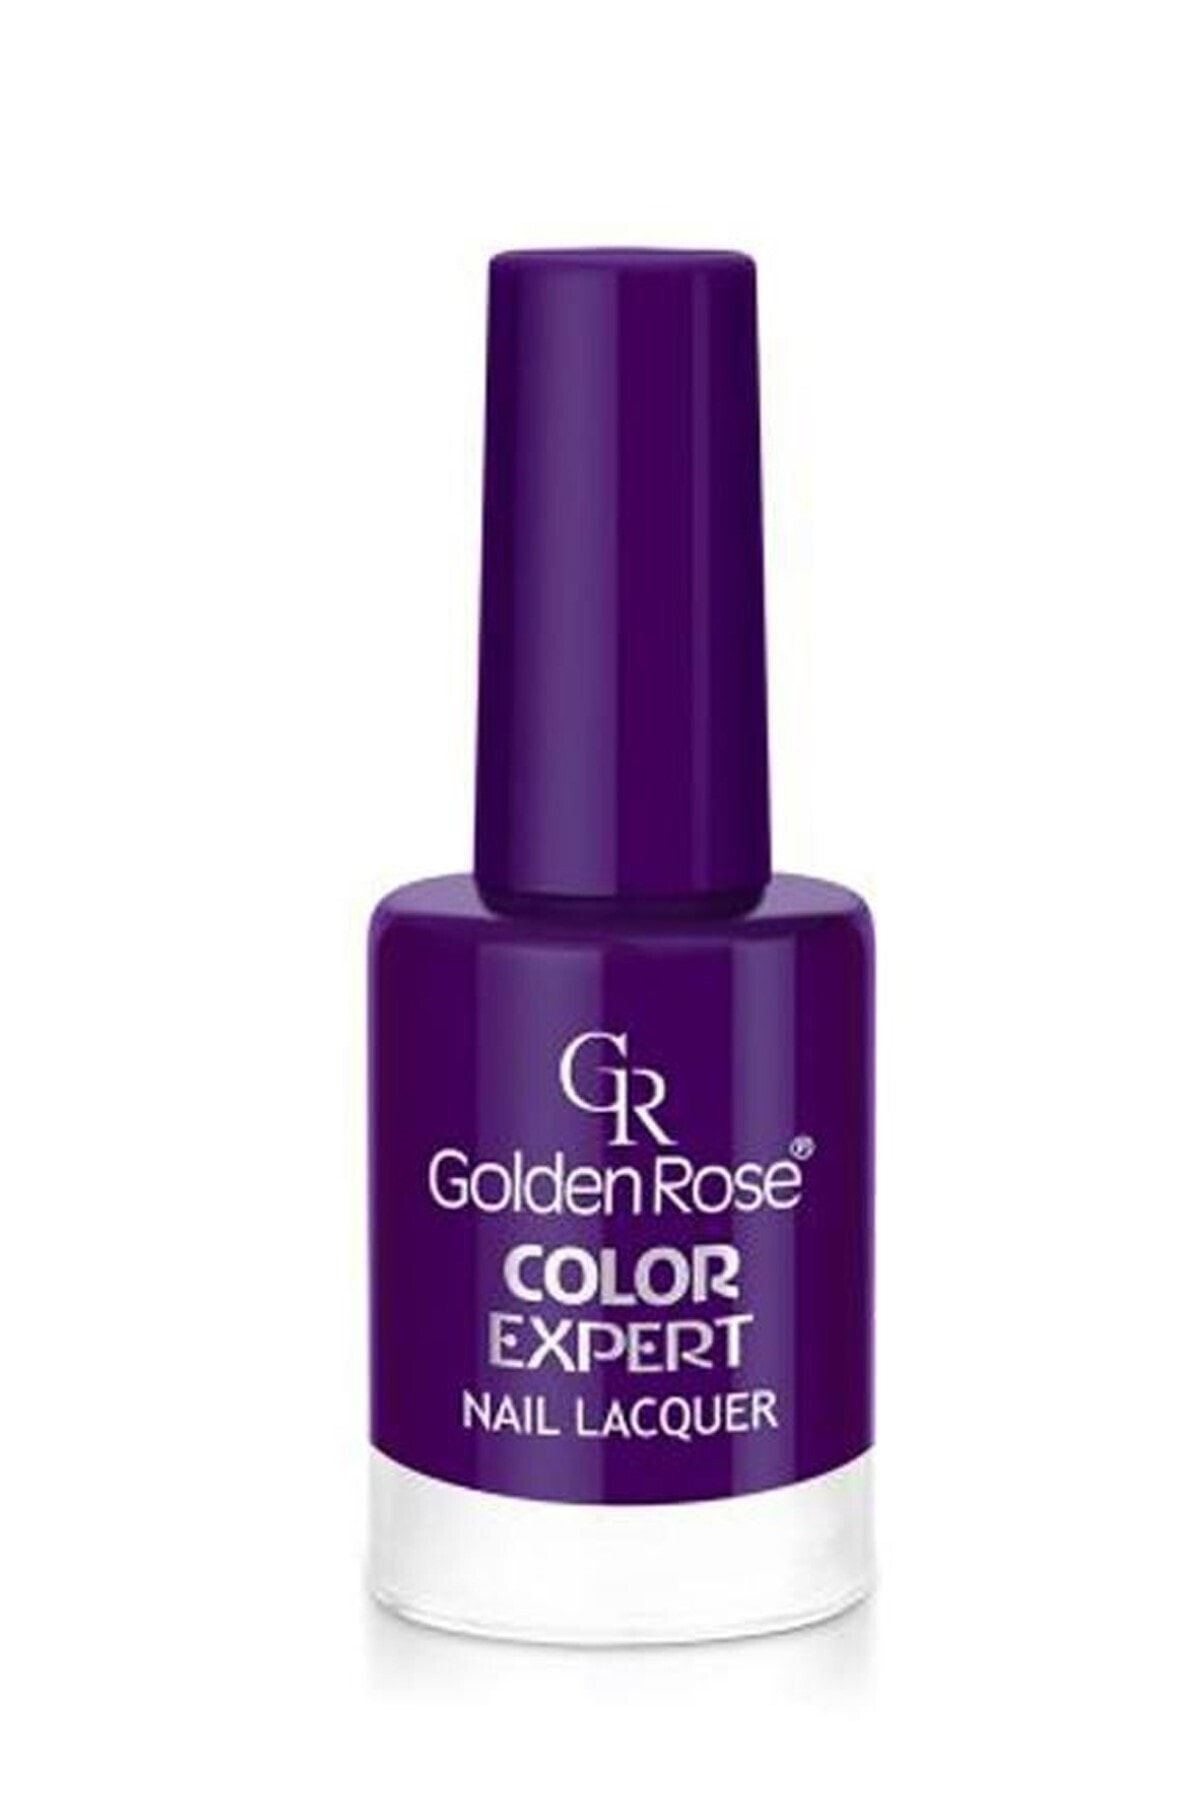 Golden Rose Oje - Color Expert Nail Lacquer No: 37 8691190703370